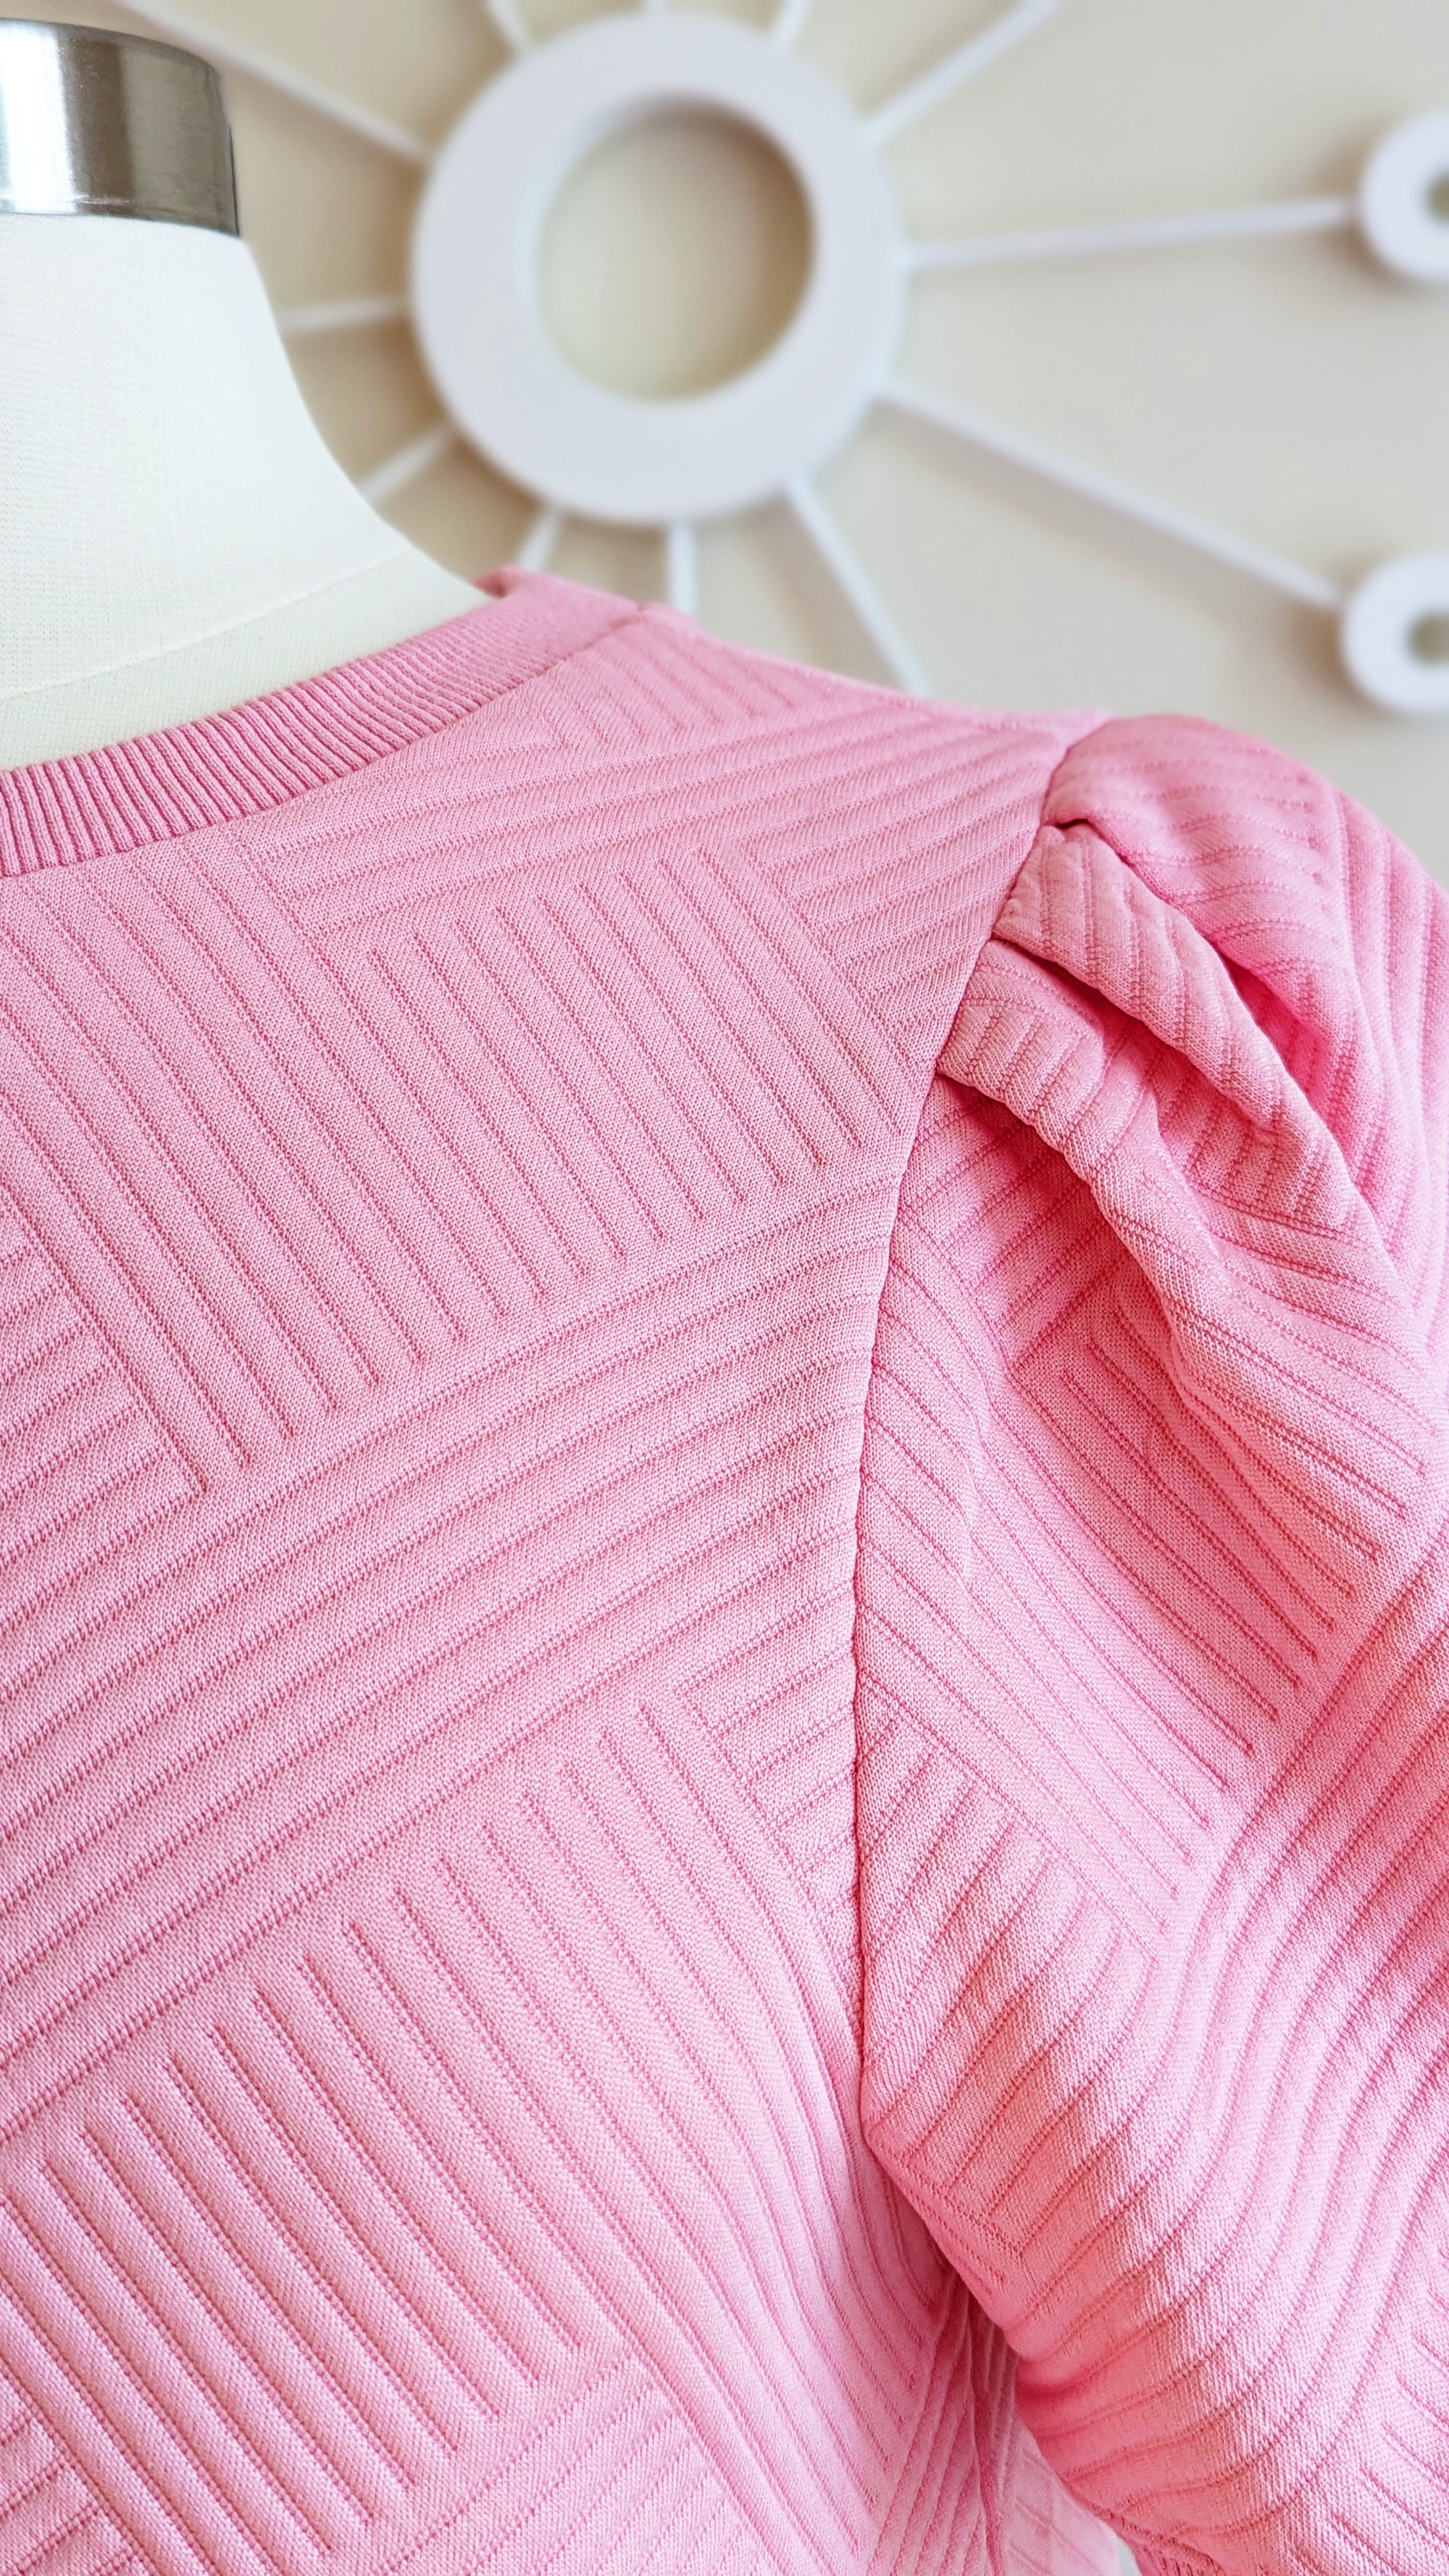 RESTOCK COMING SOON! 🩷🩷 Baby Pink Textured Dress